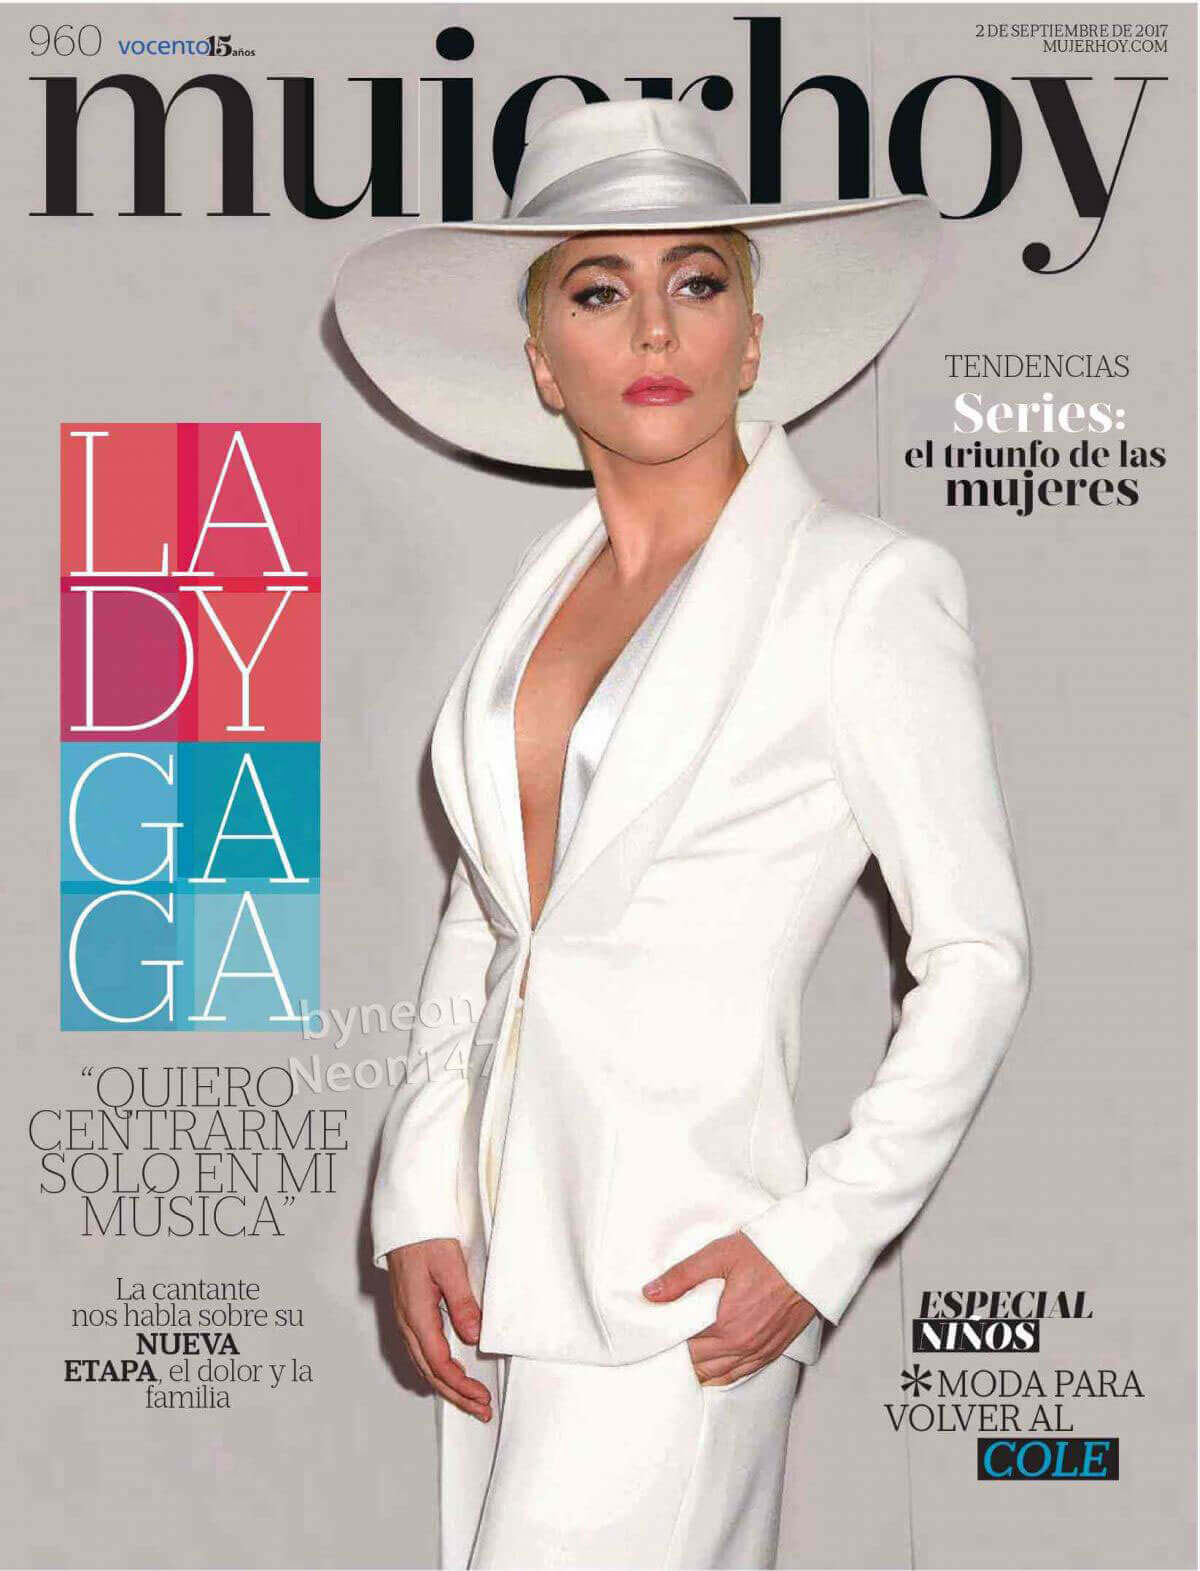 Lady Gaga Photos in Mujerhoy Magazine, September 2017